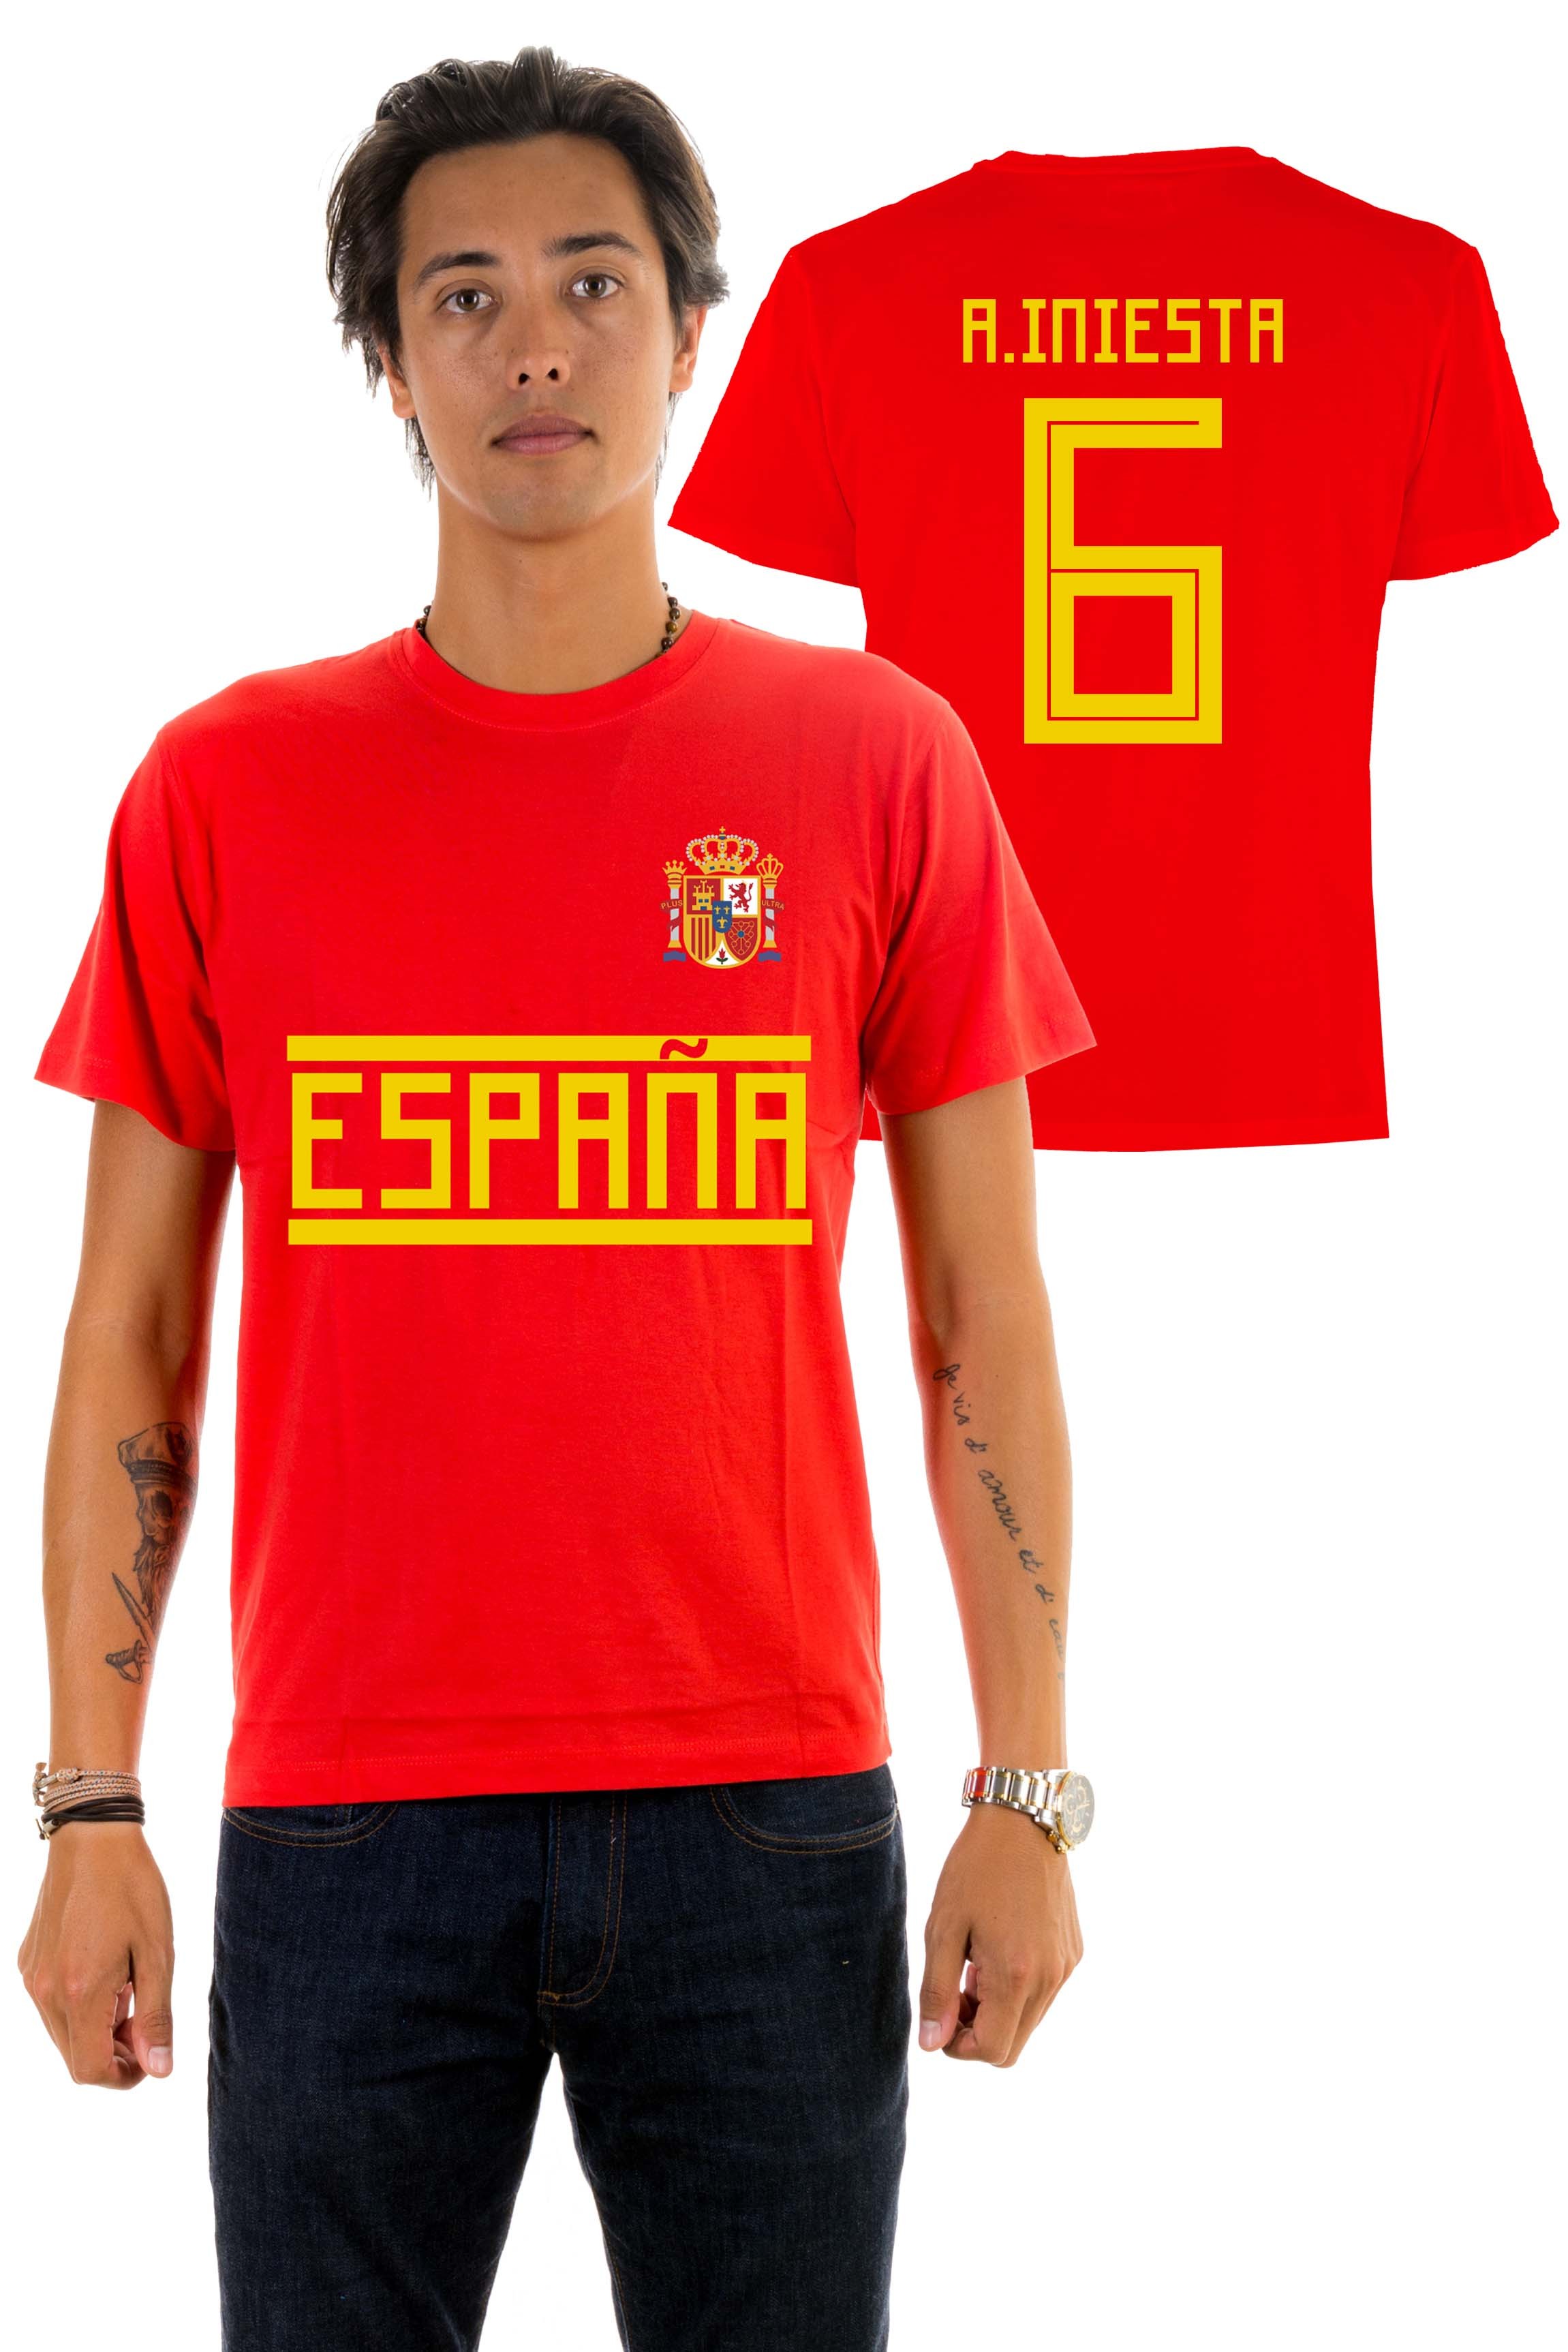 iniesta world cup shirt